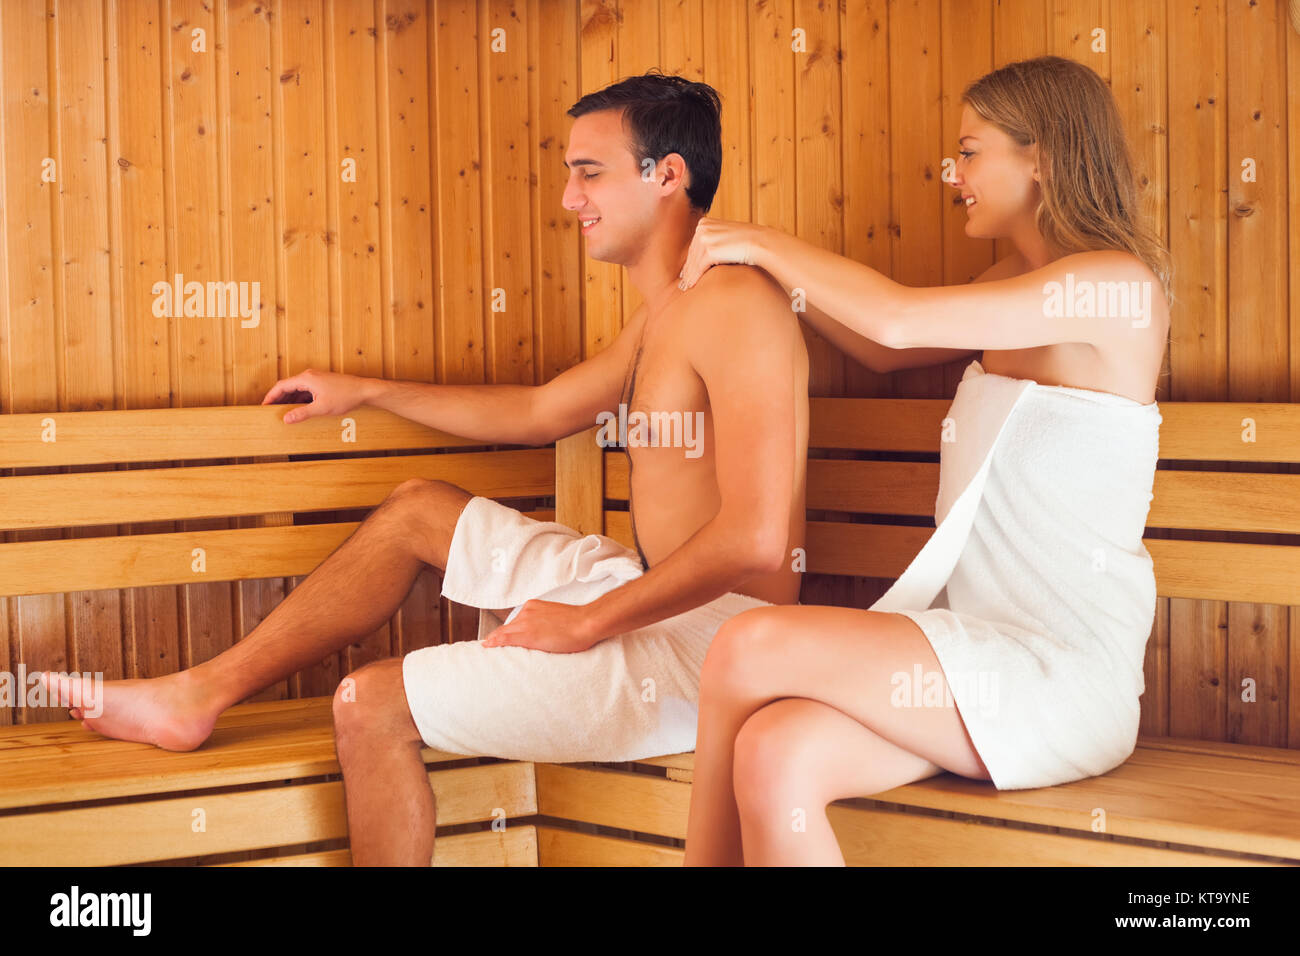 Bared Girl Sits Sauna Towel Stock Photo 24410158